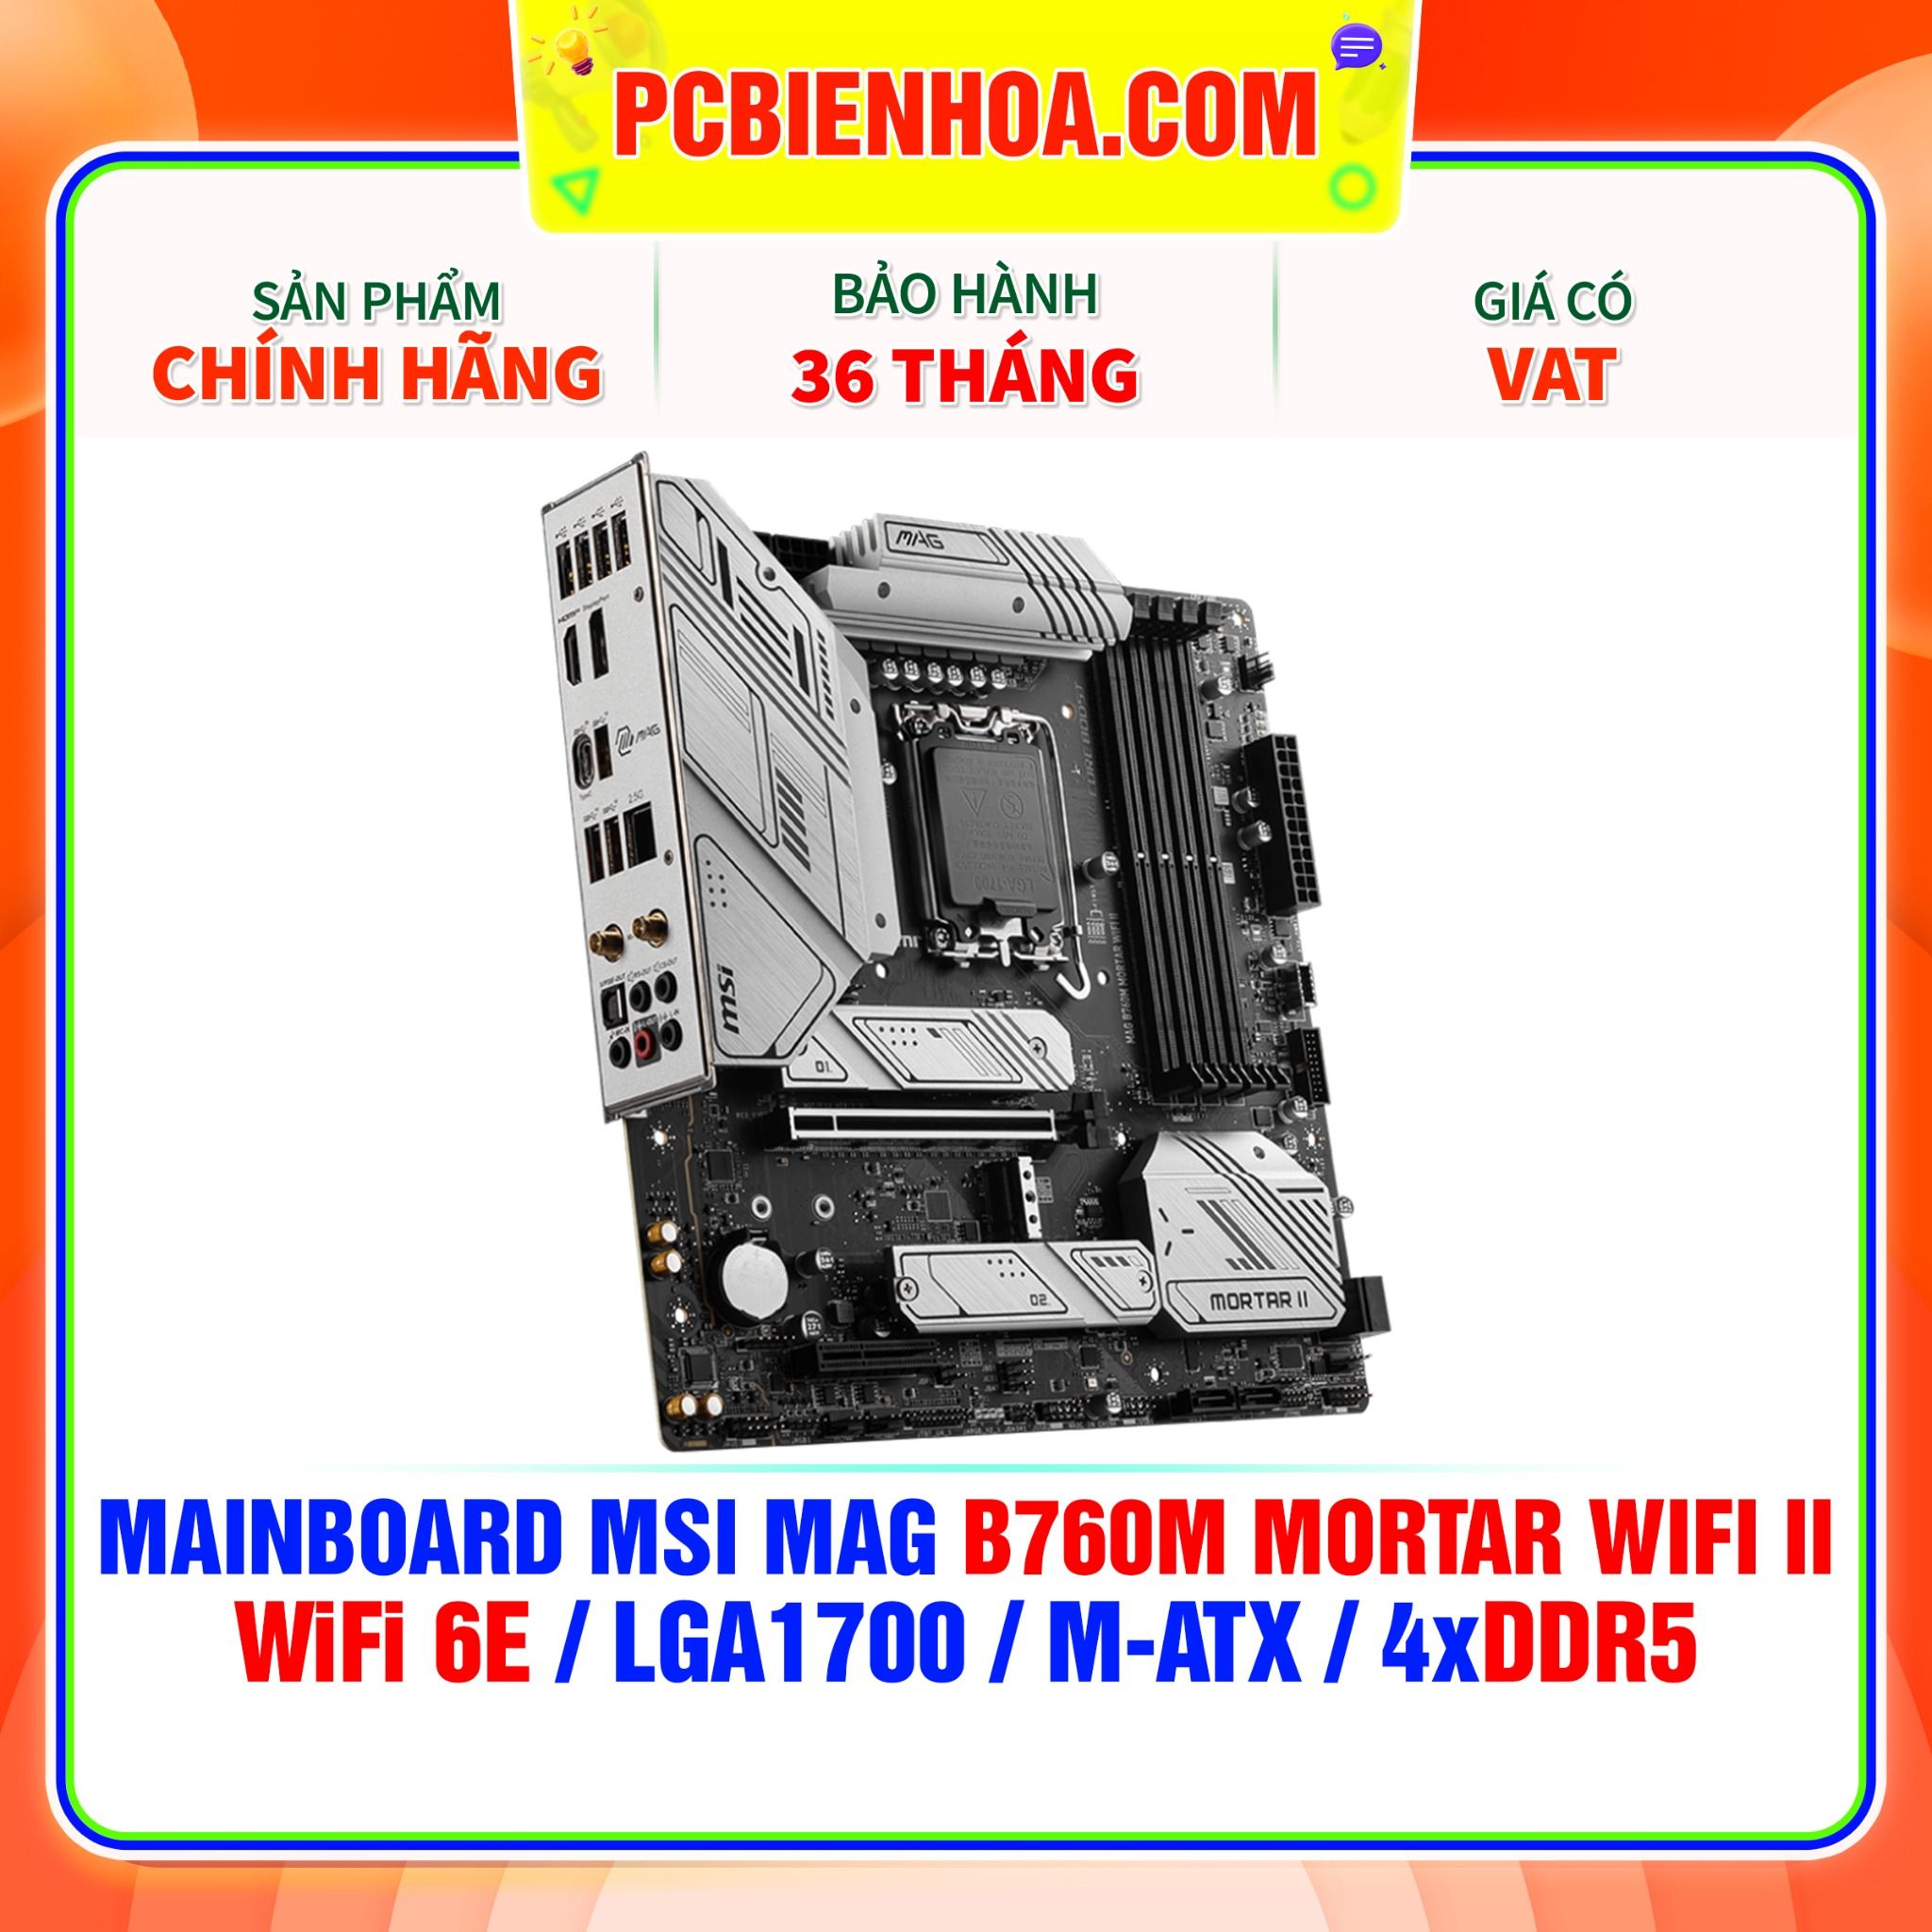  DDR5 - MAINBOARD MSI MAG B760M MORTAR WIFI II ( WiFi 6E / LGA1700 / m-ATX / 4xDDR5 ) 